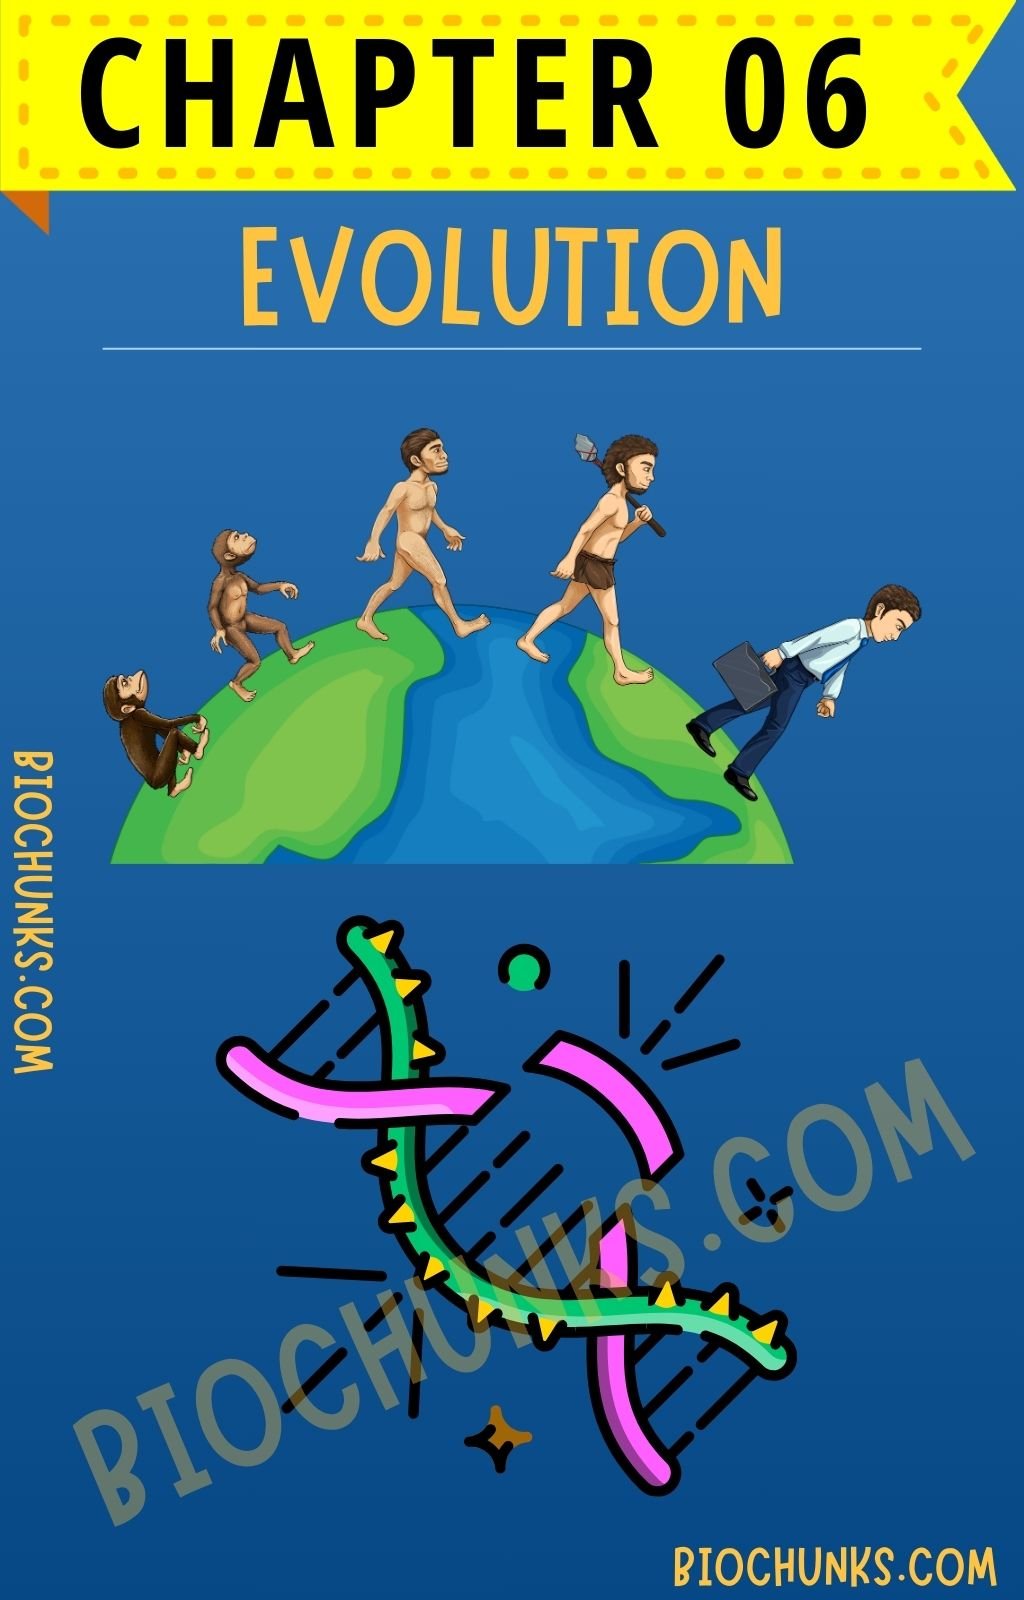 Evolution Chapter 06 Class 12th biochunks.com